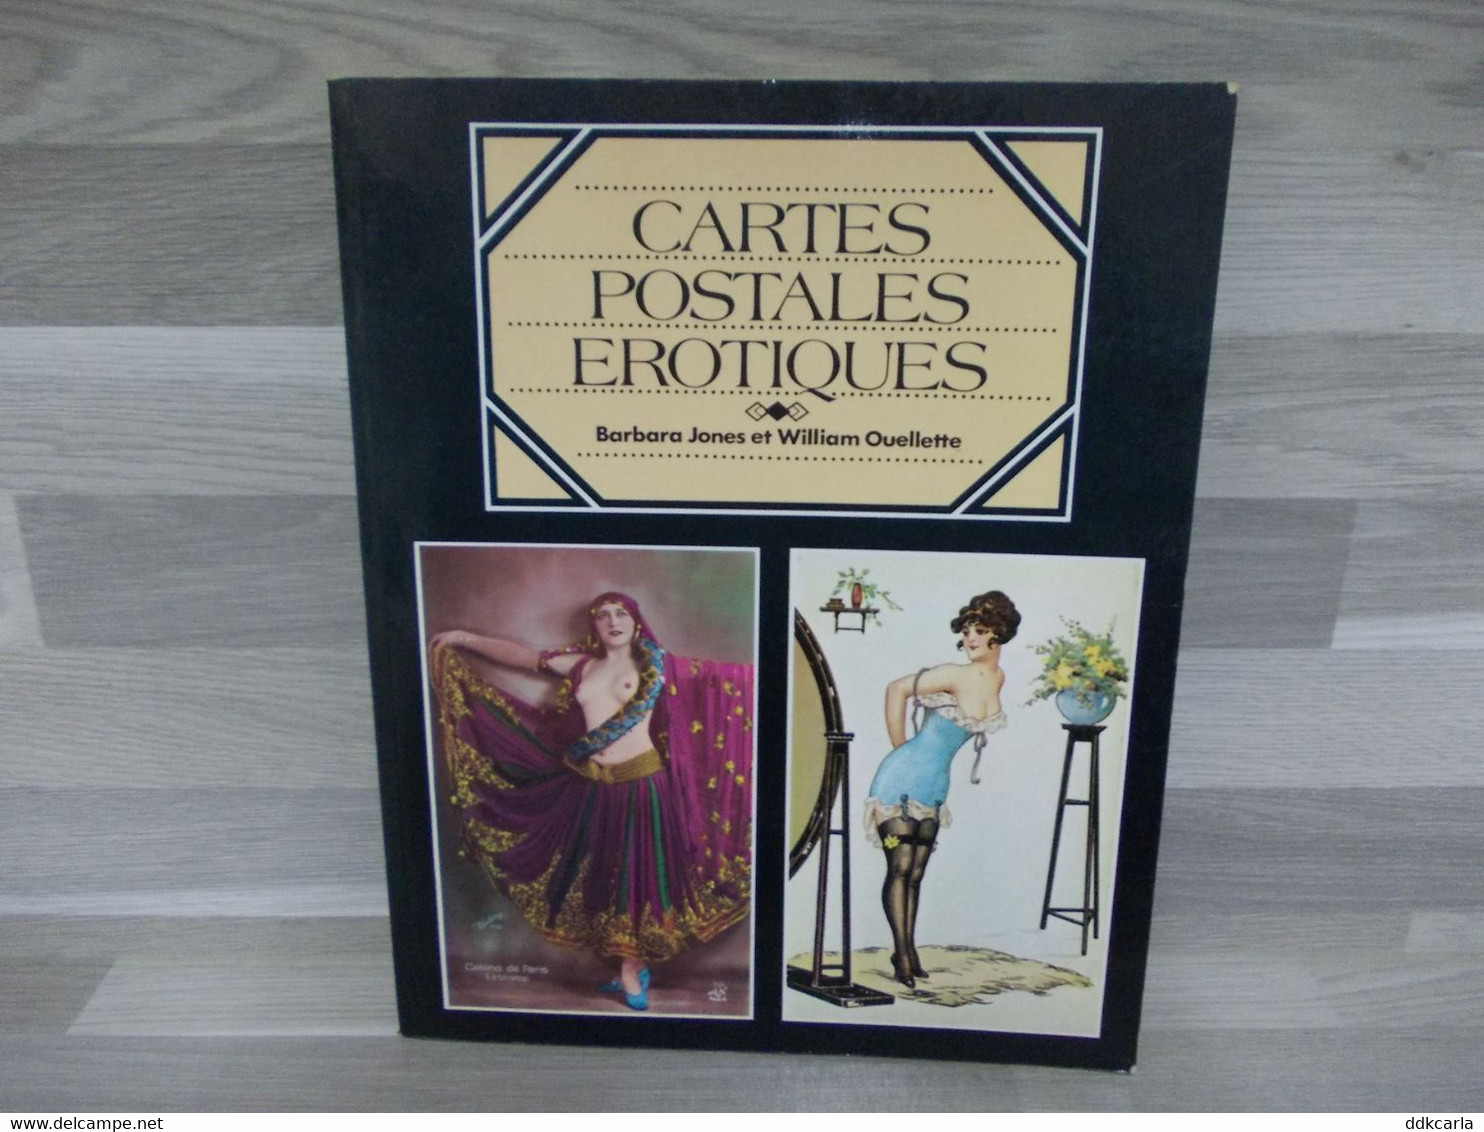 Cartes Postales Erotiques - Barbara Jones Et William Ouellette - Boeken & Catalogi